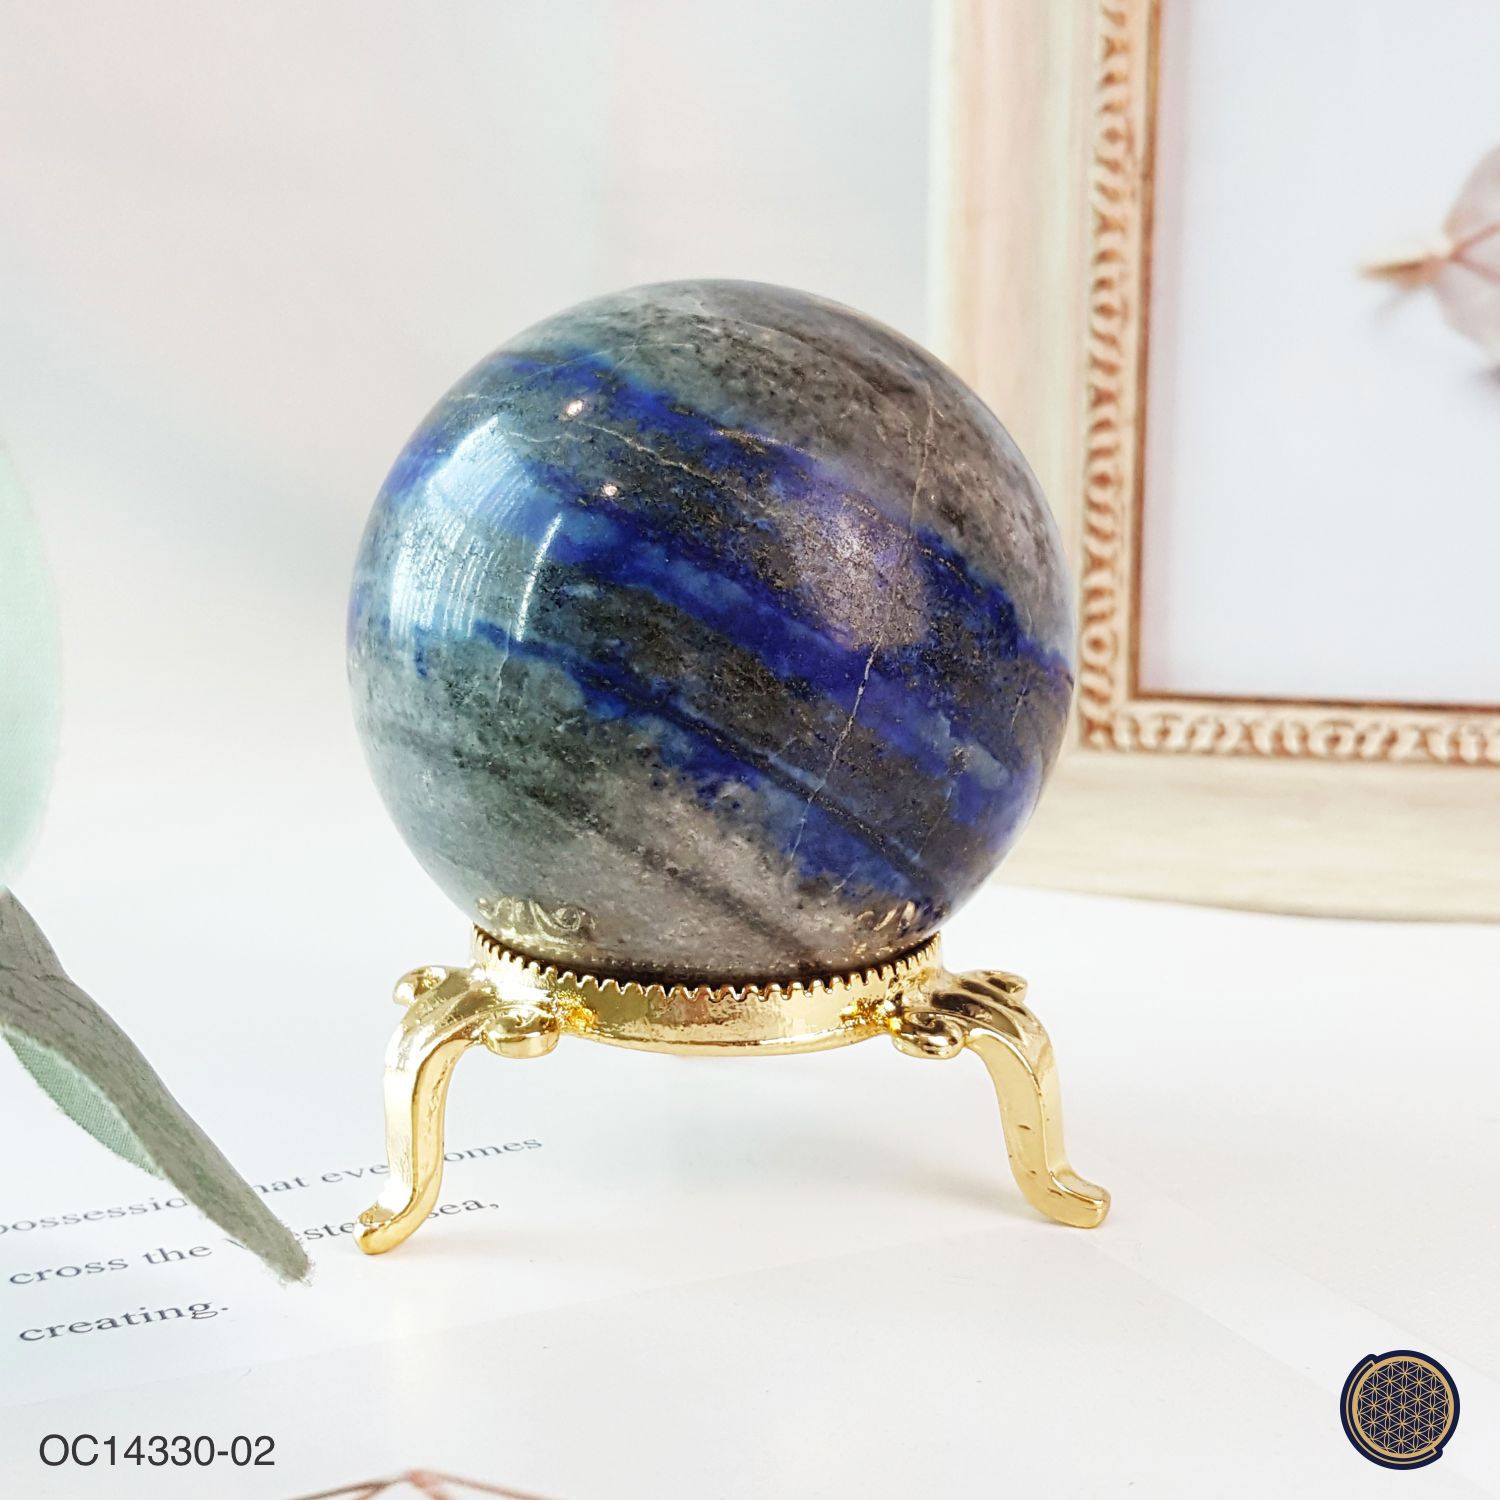 55mm Lapis Lazuli Ball